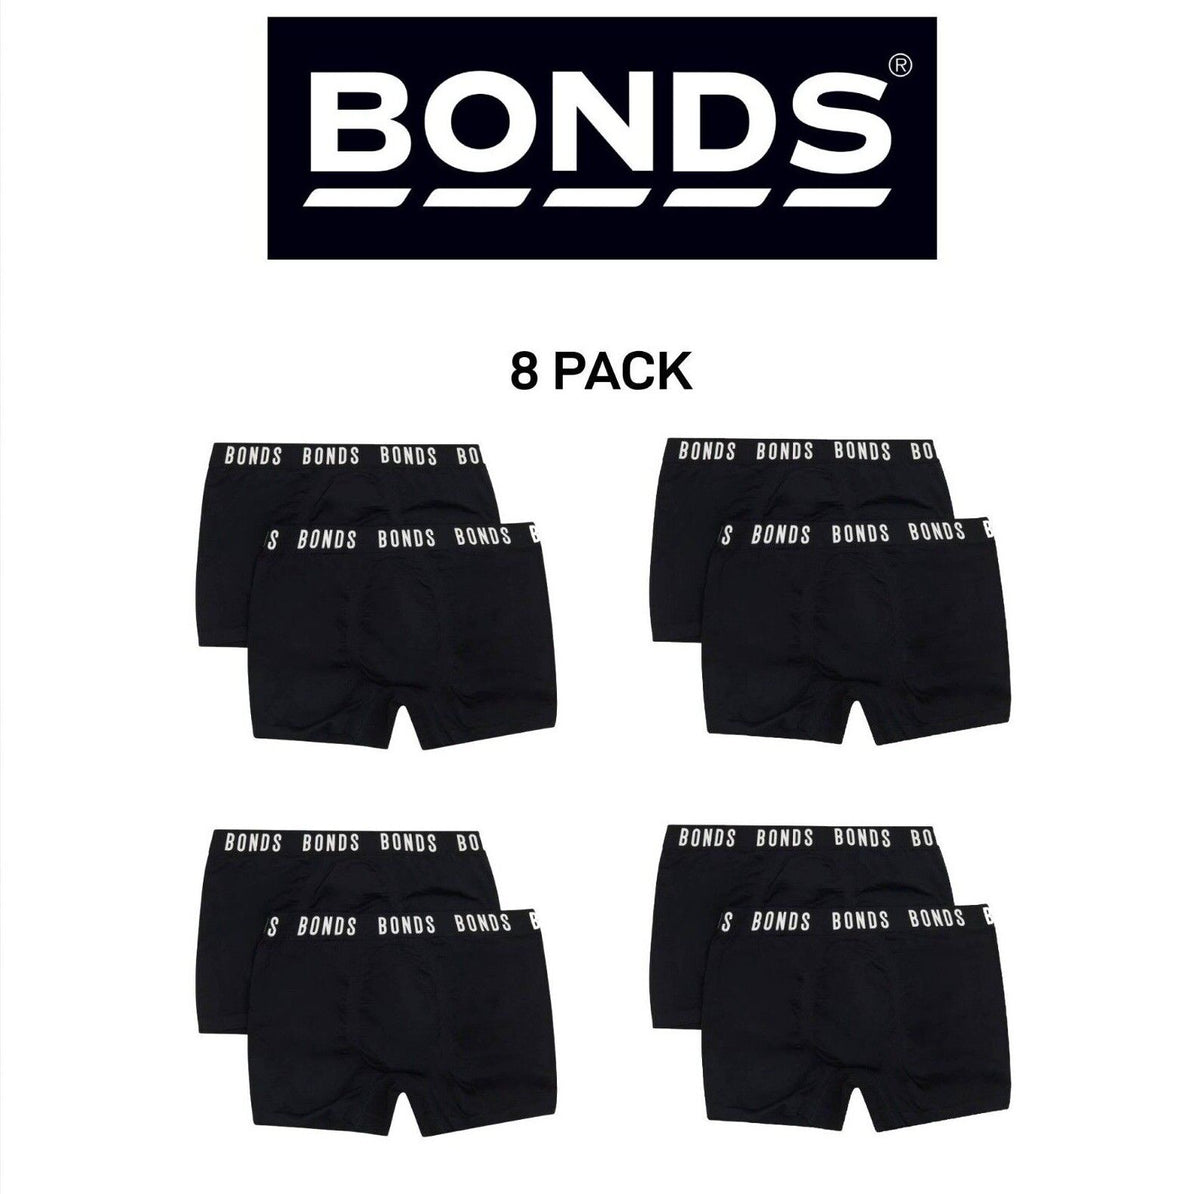 Bonds Boys Super Stretchies Trunk Extra Stretchy Comfy Undies 8 Pack UXXK2A